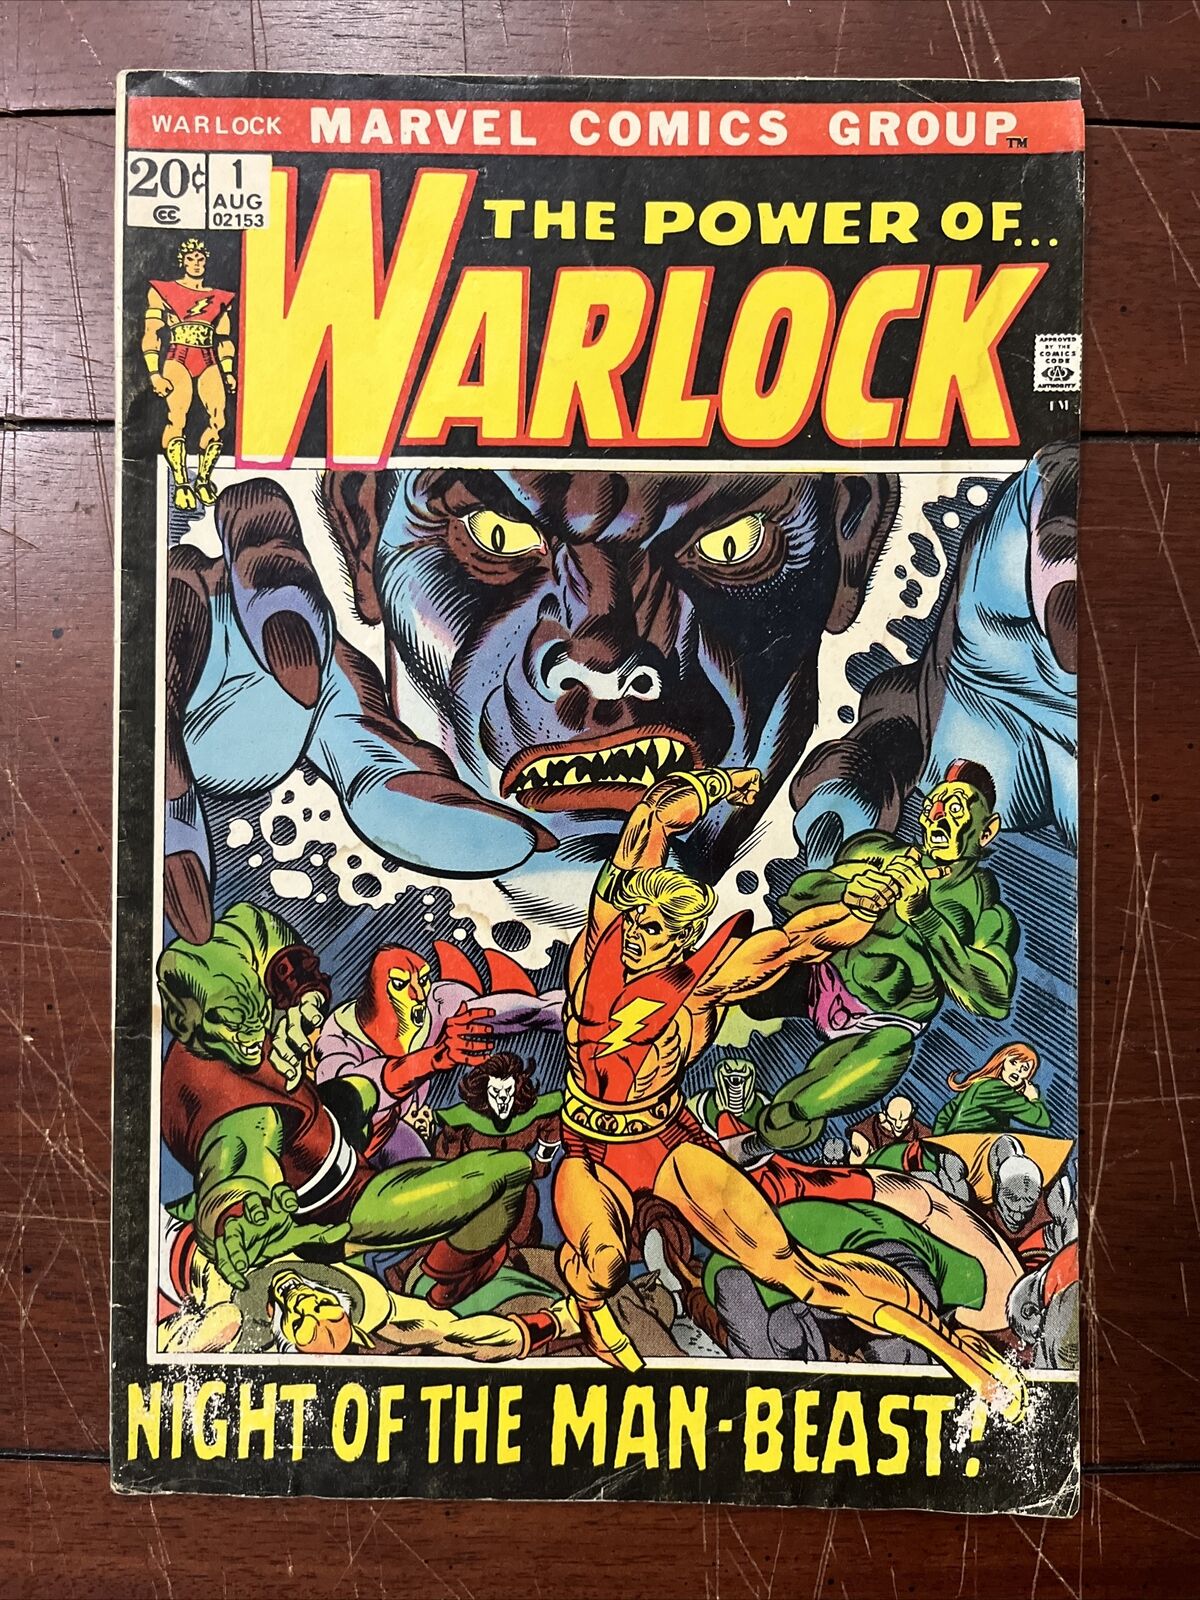 The POWER of WARLOCK # 1 MARVEL COMICS August 1972 ORIGIN ISSUEvs MAN-BEAST